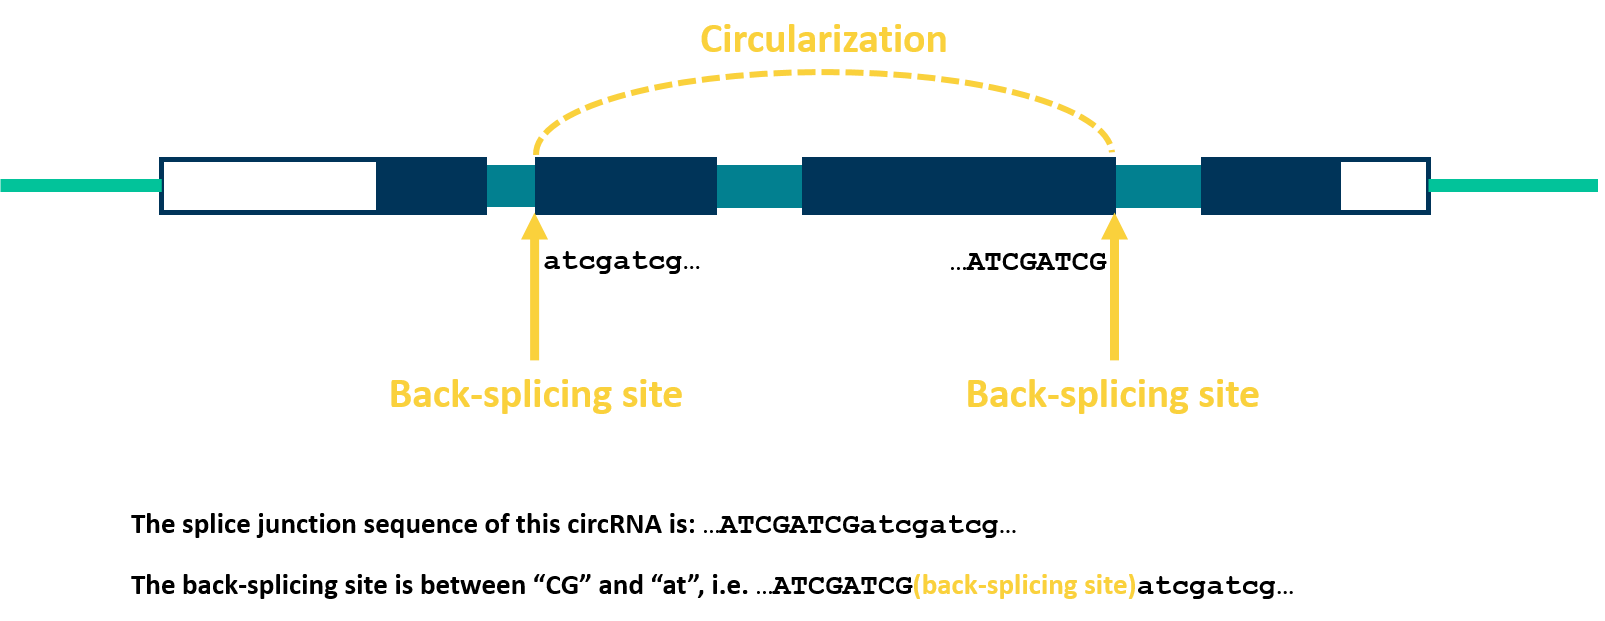 Splice junction sequence of circRNAs.